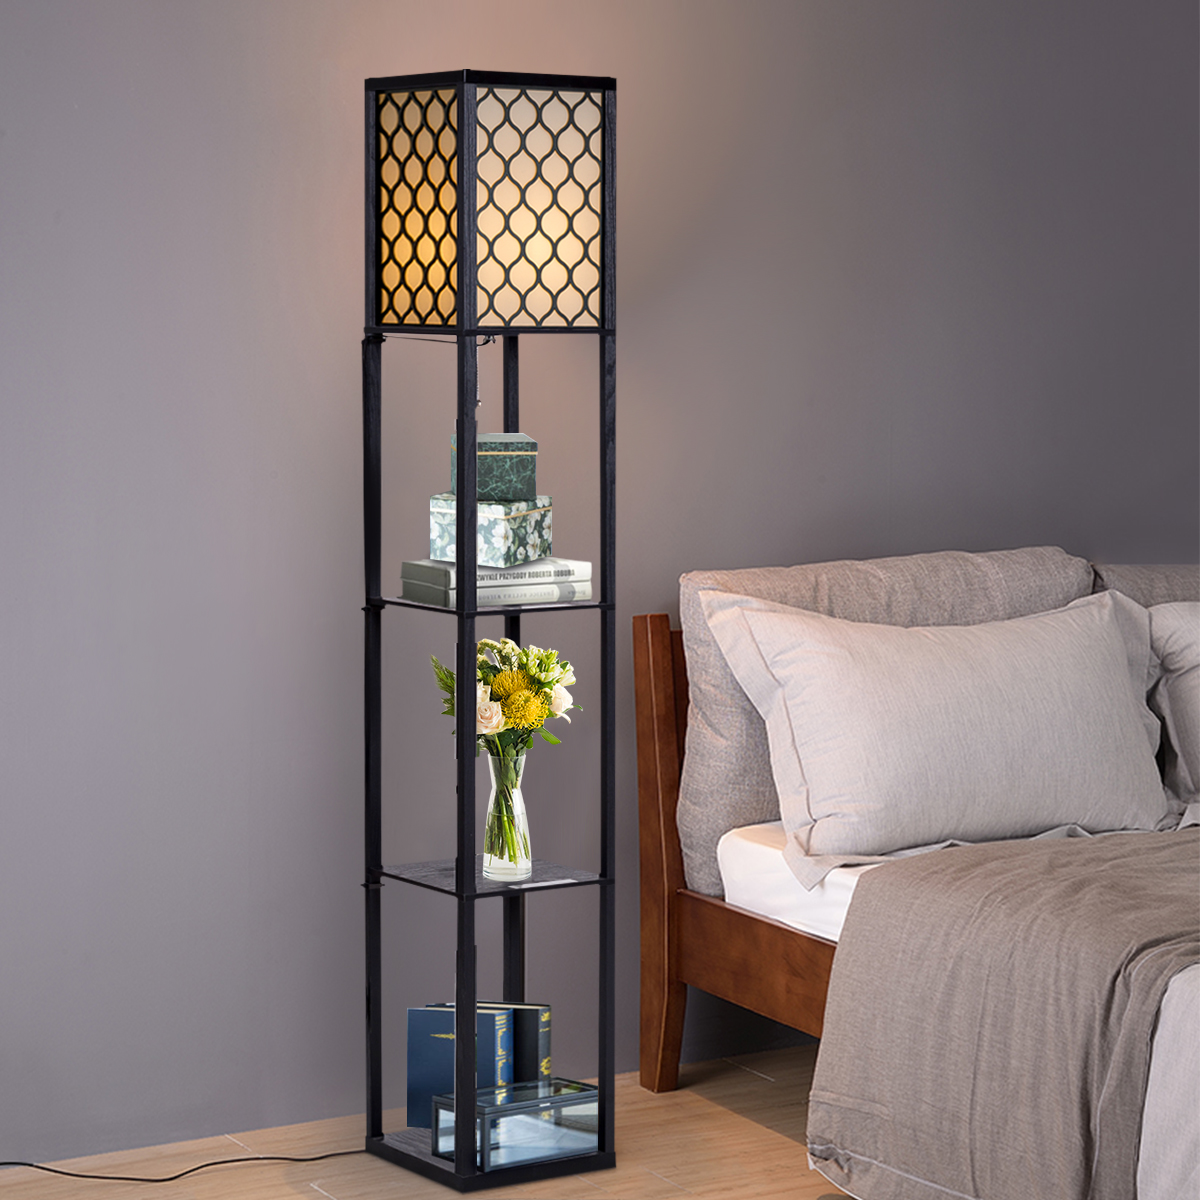 Vloerlamp Plank Moderne Binnenverlichting met 3-Level Vloerlamp 160x26x26cm